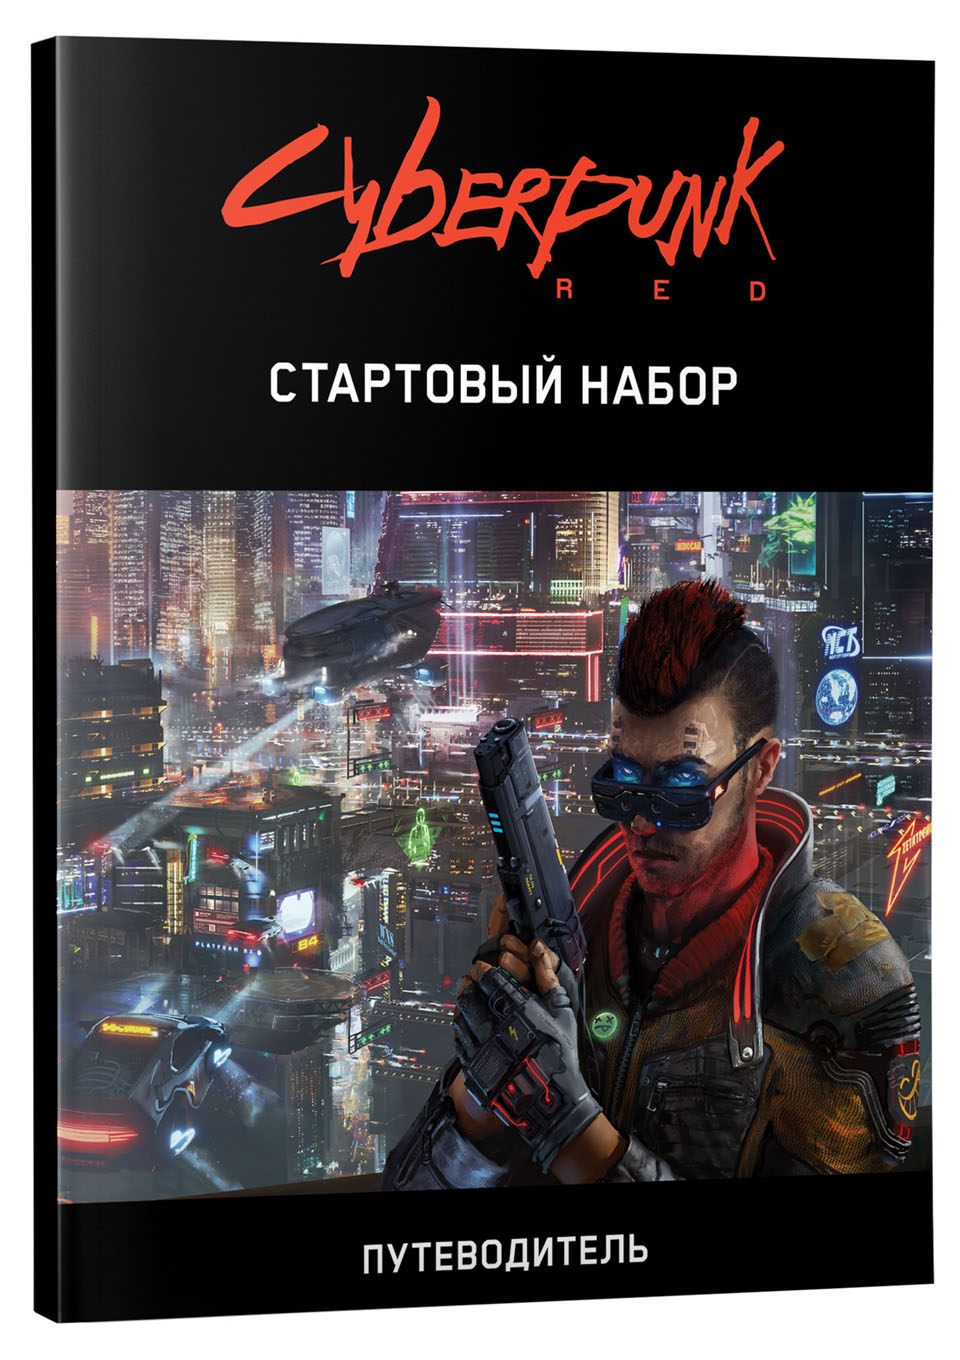 Cyberpunk red стартовый набор лист персонажа фото 27